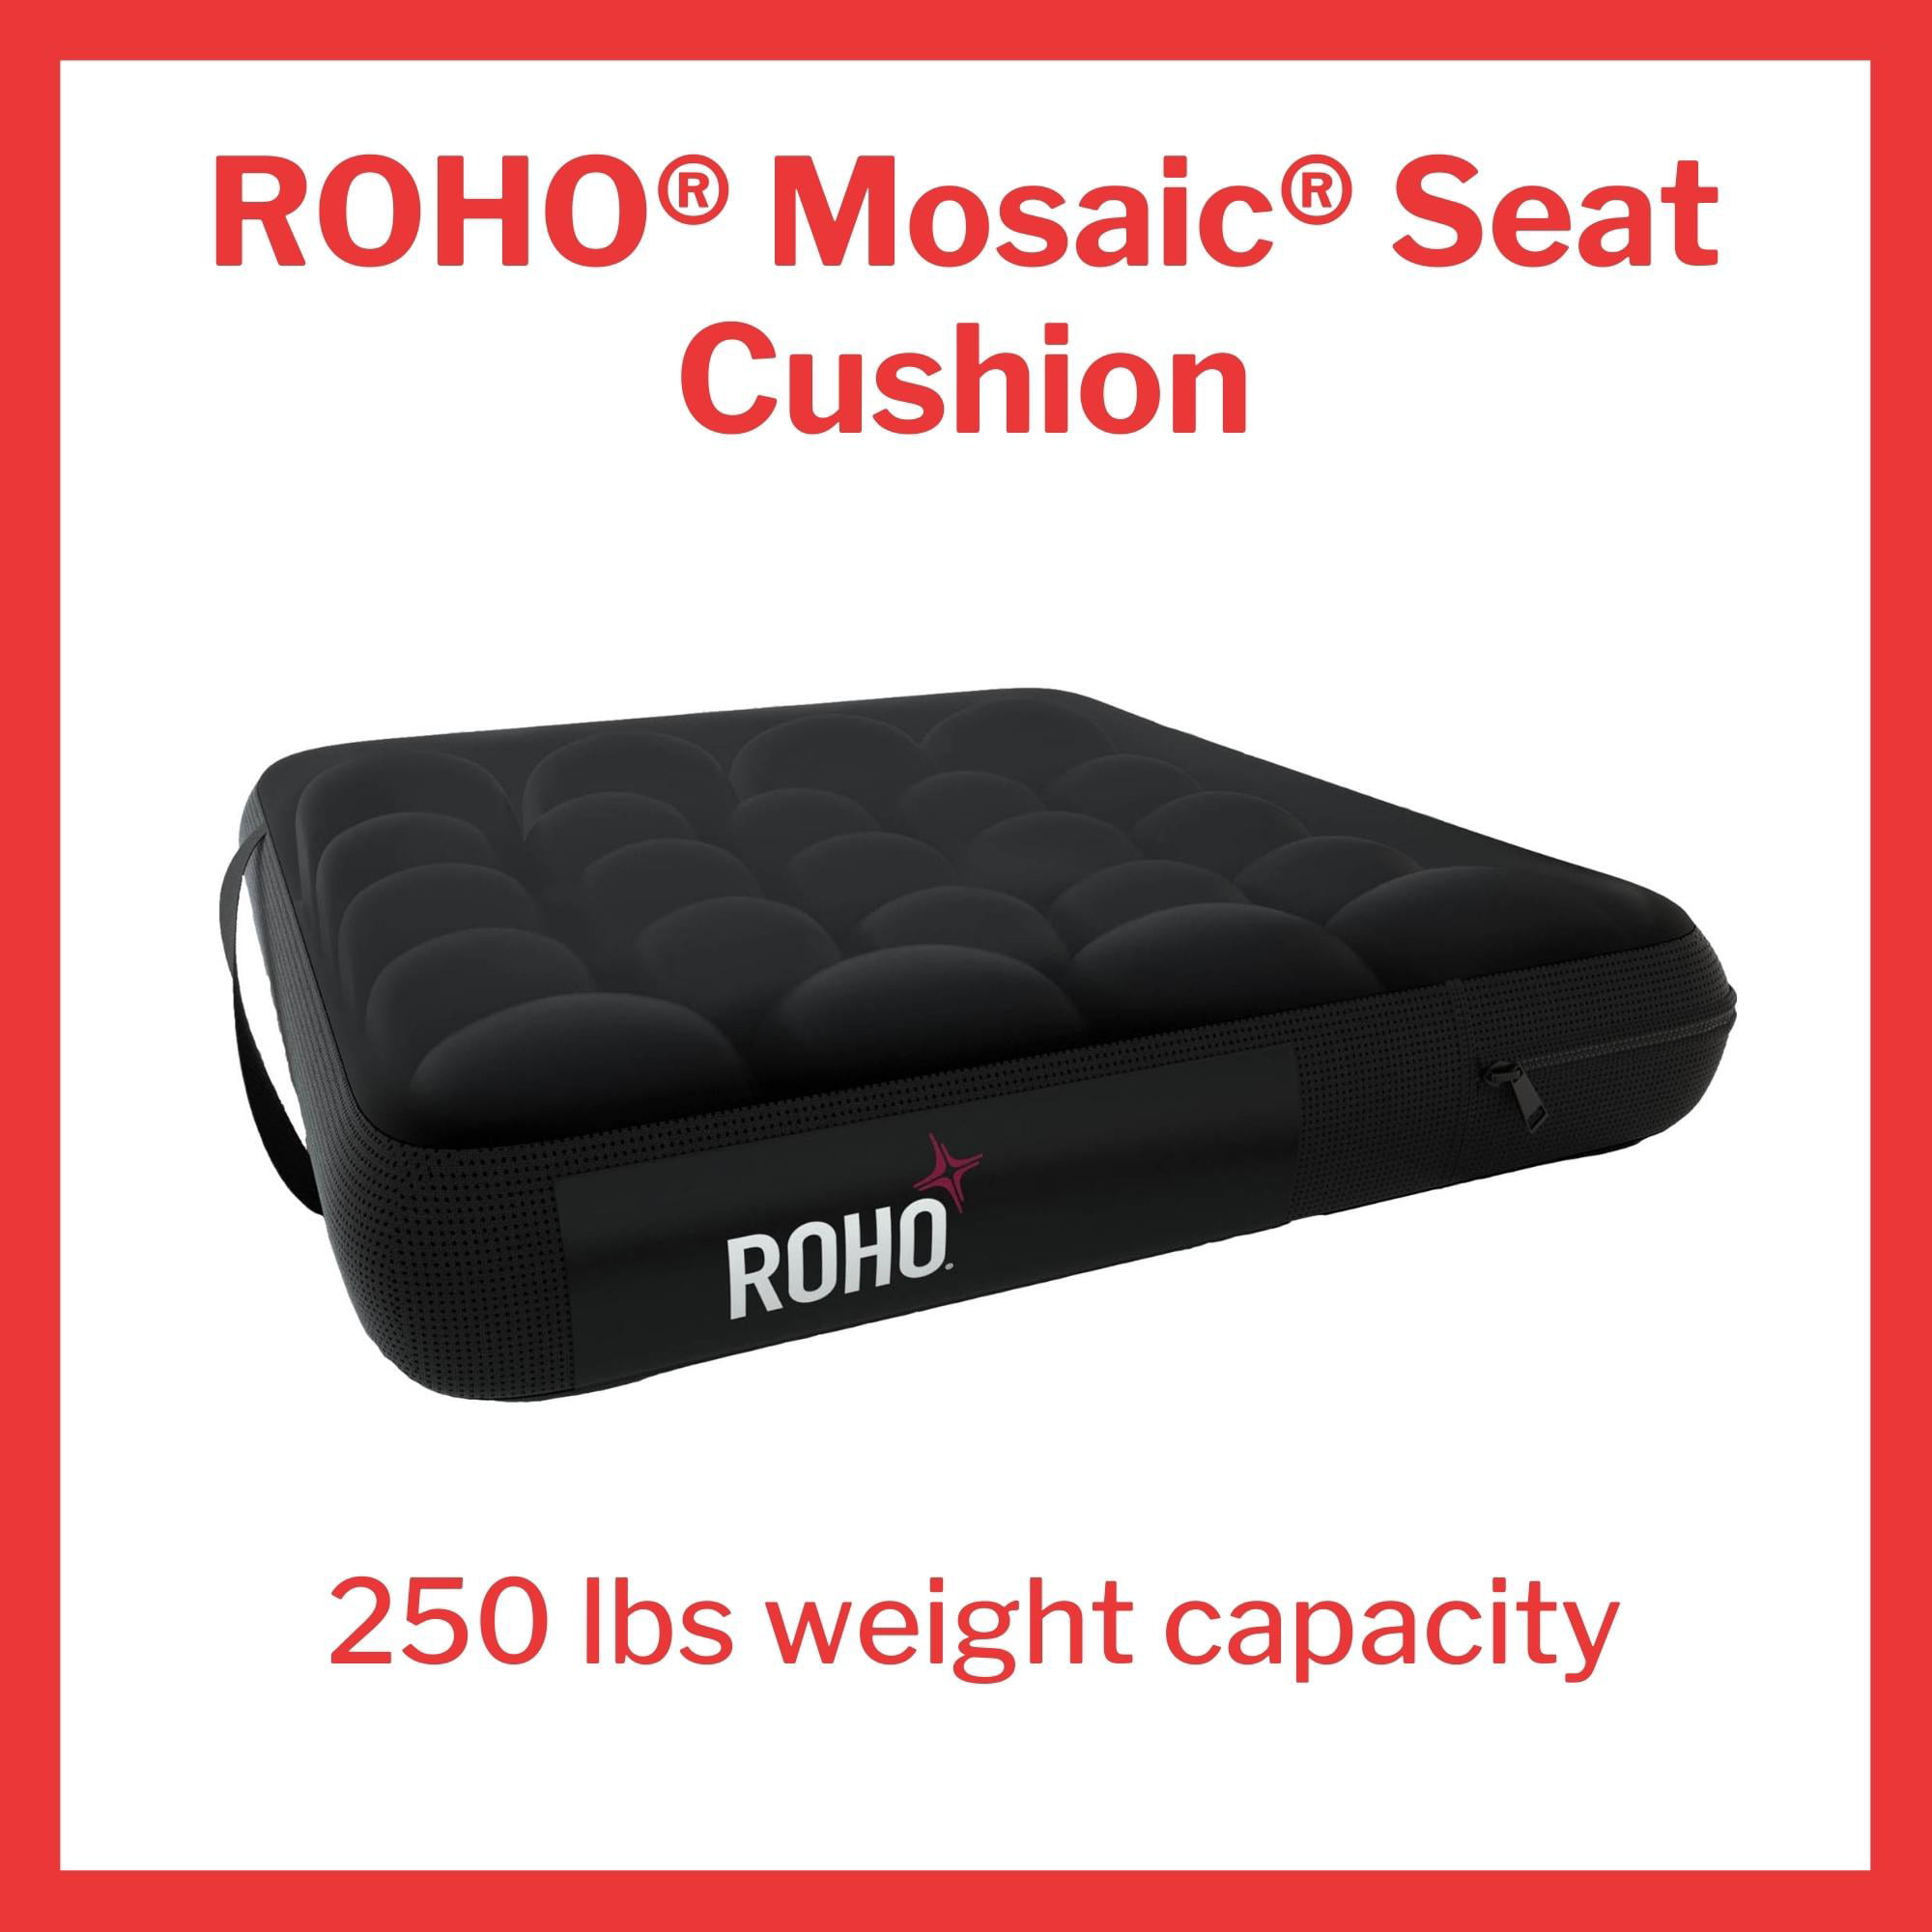 Buy ROHO Mosaic Cushion